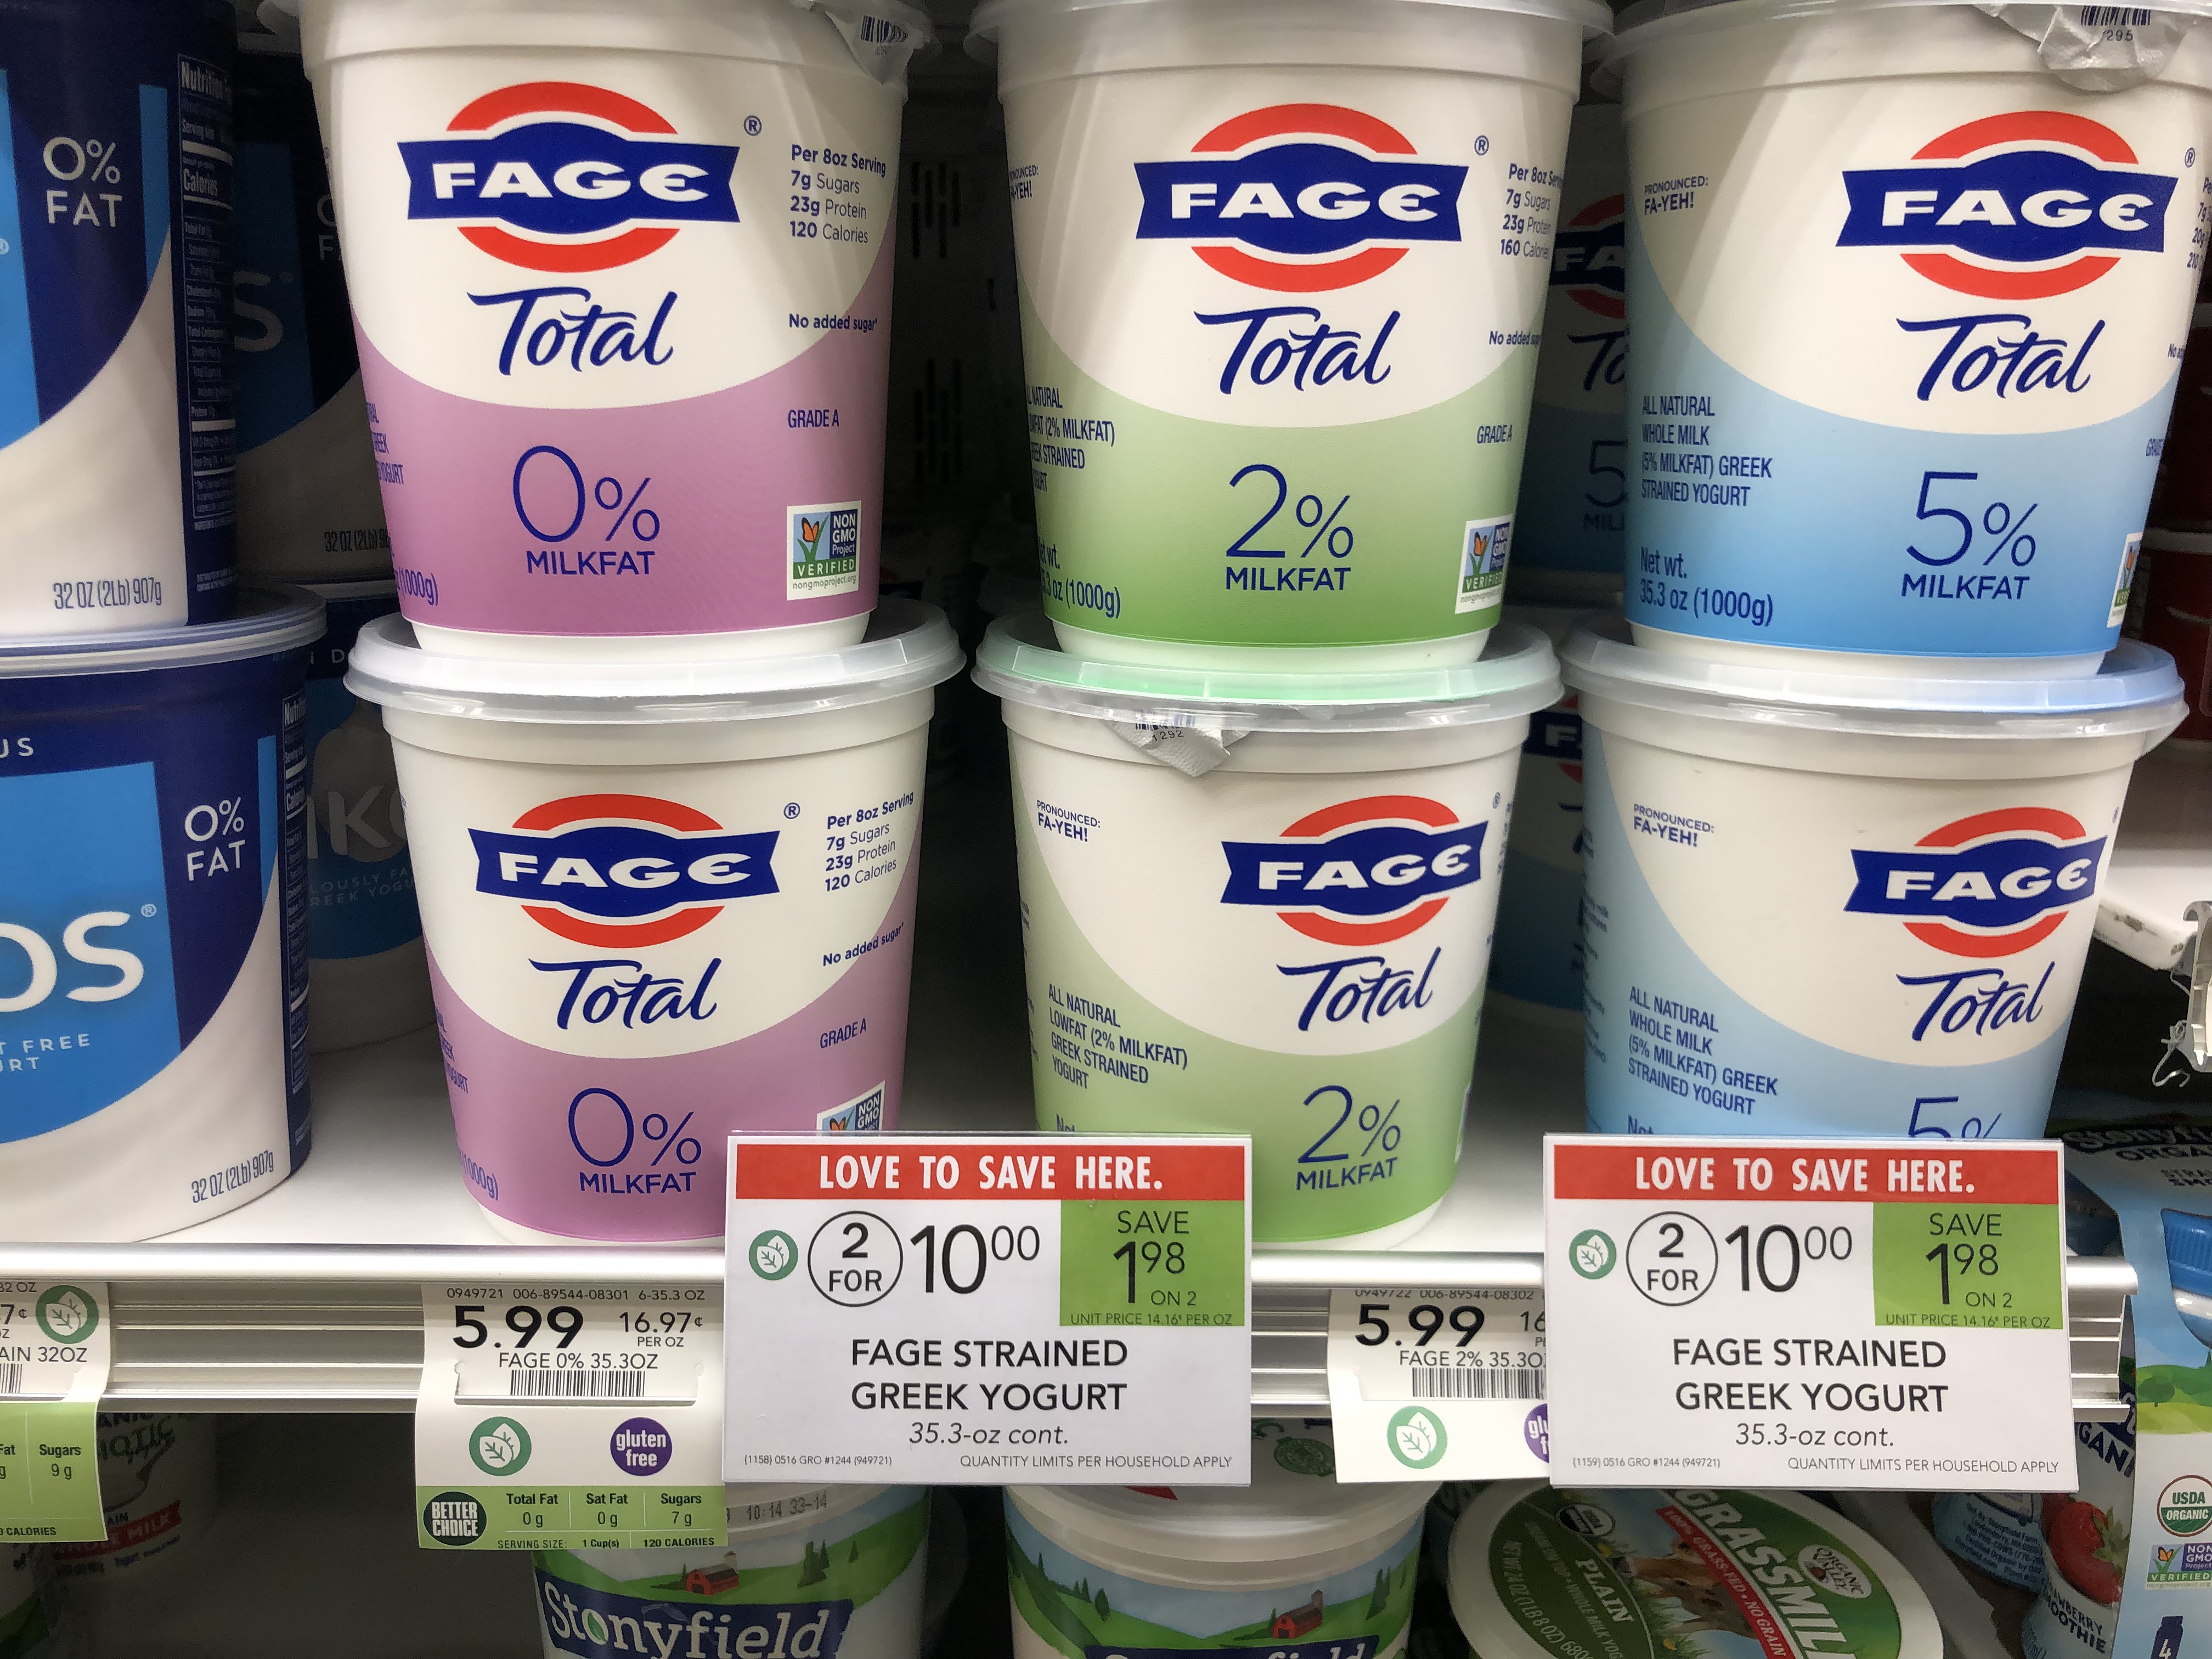 lowfat flavored publix premium greek yogurt